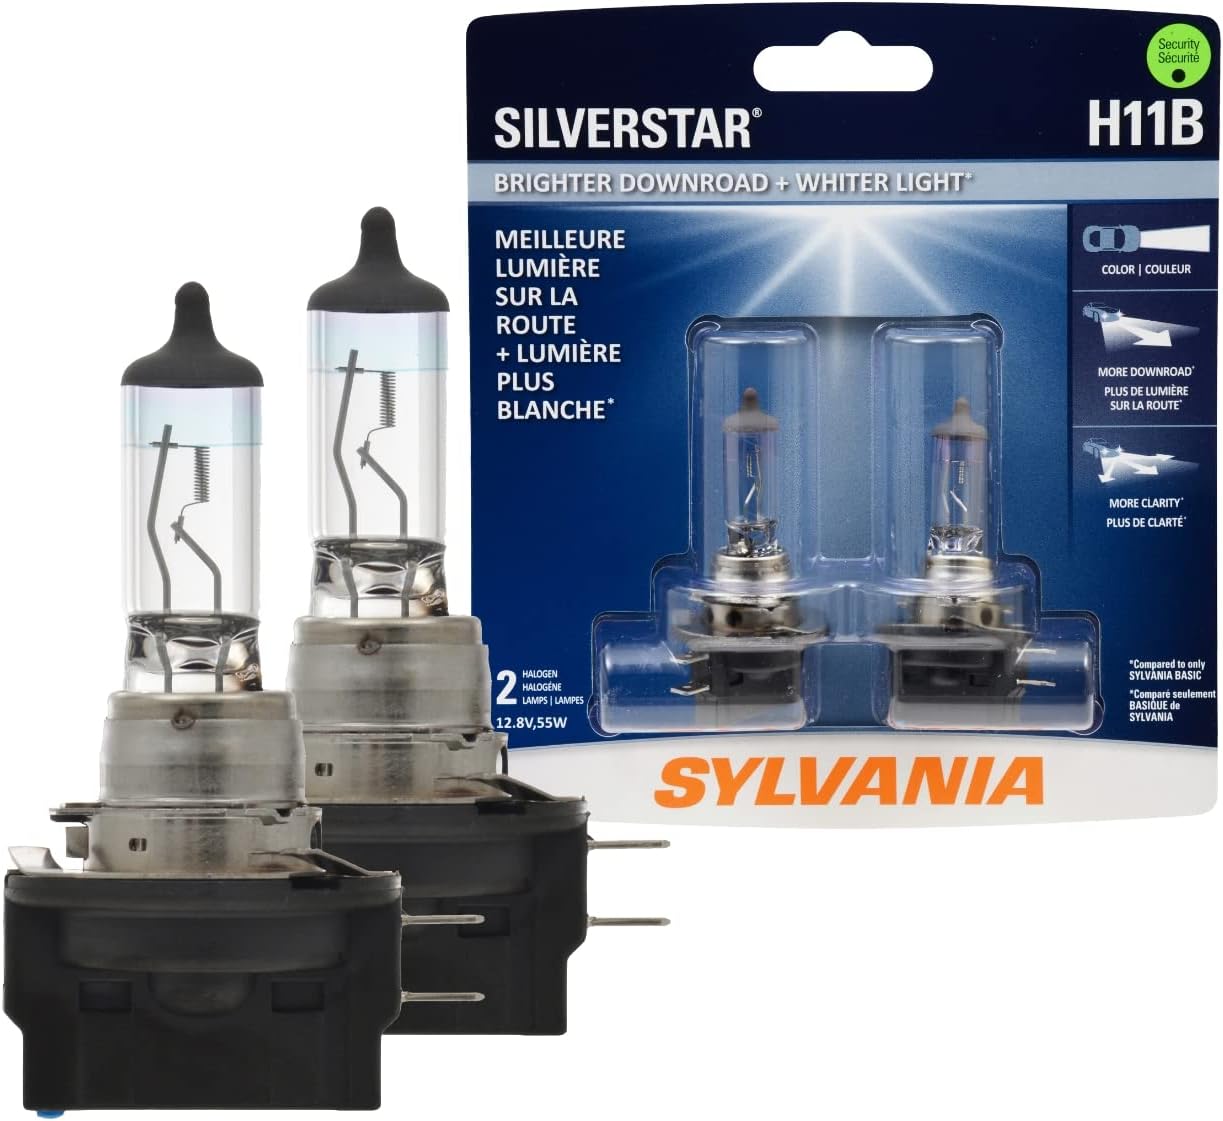 SYLVANIA H11B SilverStar High Performance Halogen Headlight Bulb, (Contains 2 Bulbs)